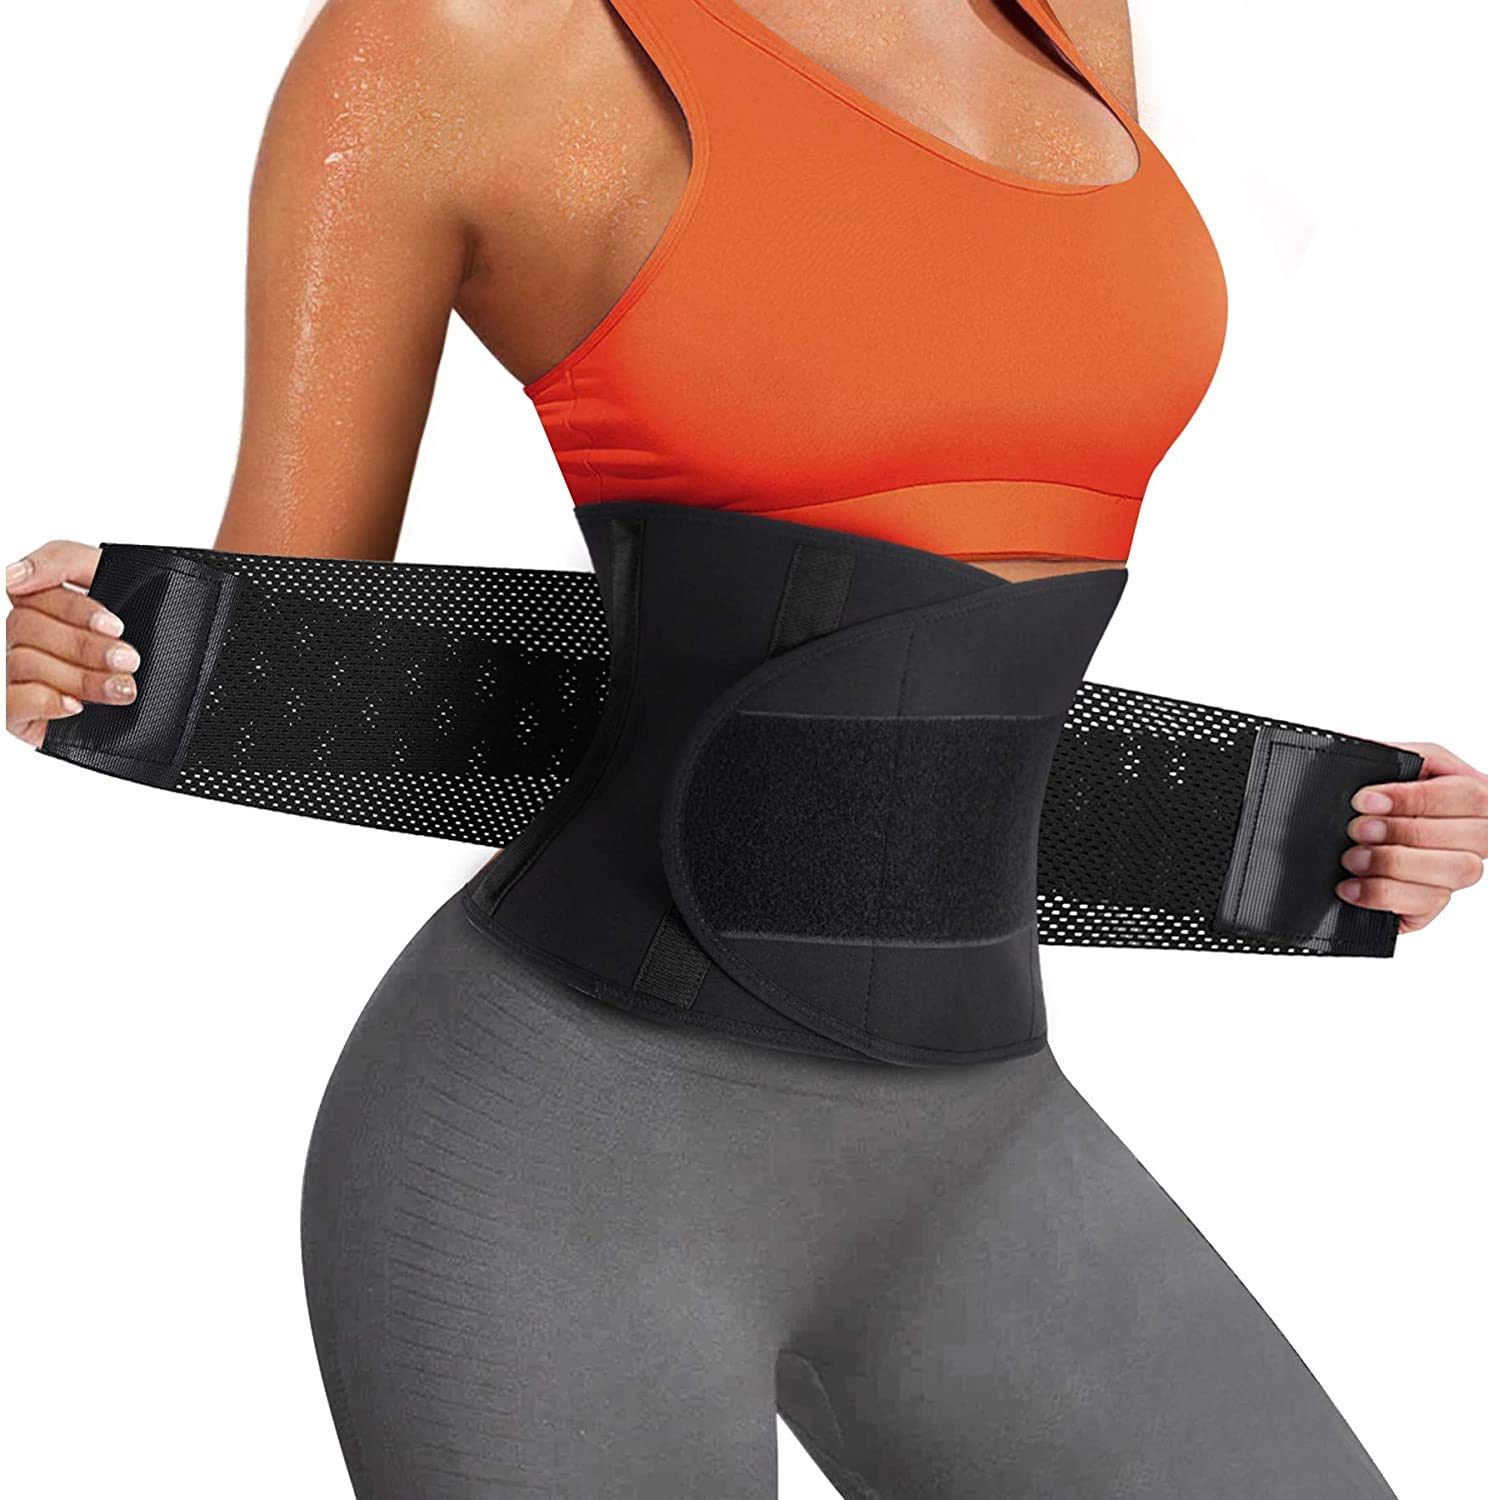 Gotoly Neoprene Sweat Waist Trainer Trimmer Belt for Women Workout Sports  Girdle Tummy Control Body Shaper Slim Belly Band(Black Large) 